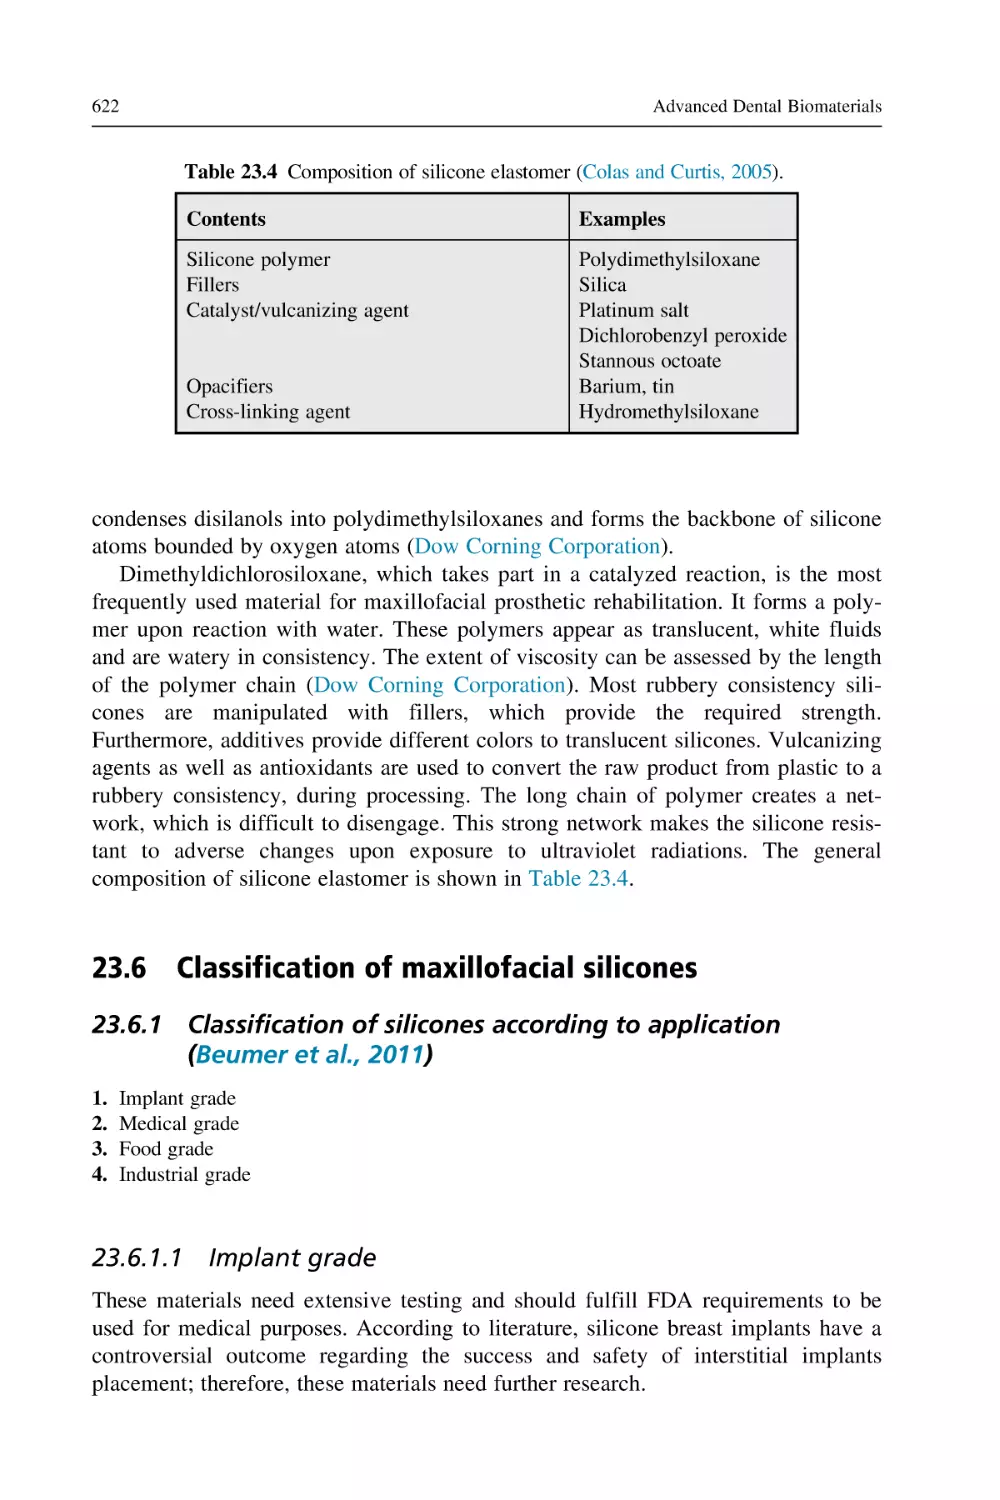 23.6 Classification of maxillofacial silicones
23.6.1 Classification of silicones according to application (Beumer et al., 2011)
23.6.1.1 Implant grade